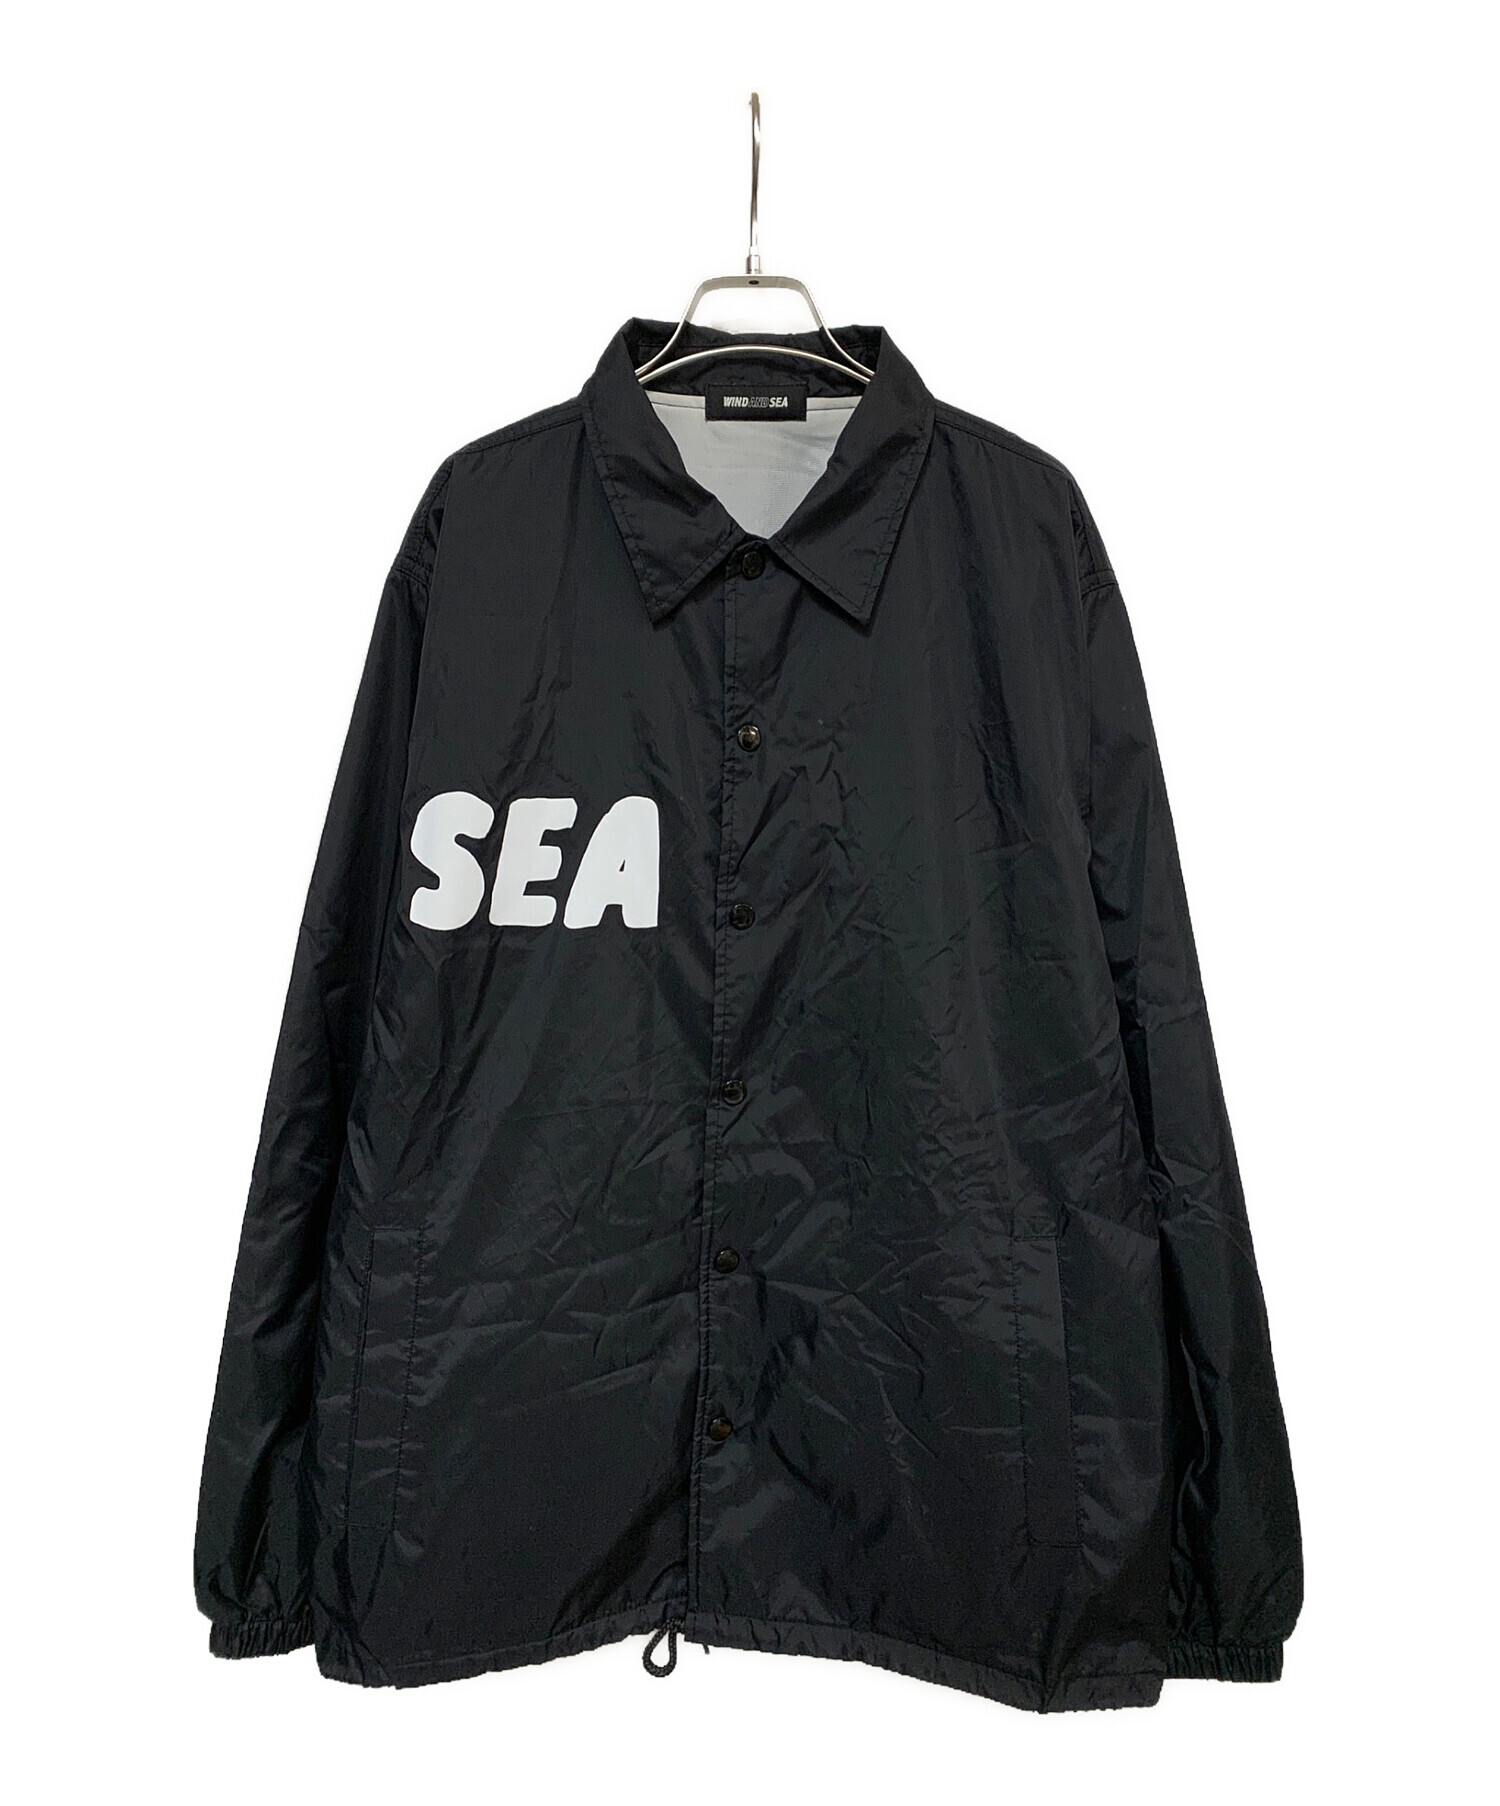 L 黒 wind and sea coach jacket コーチジャケット